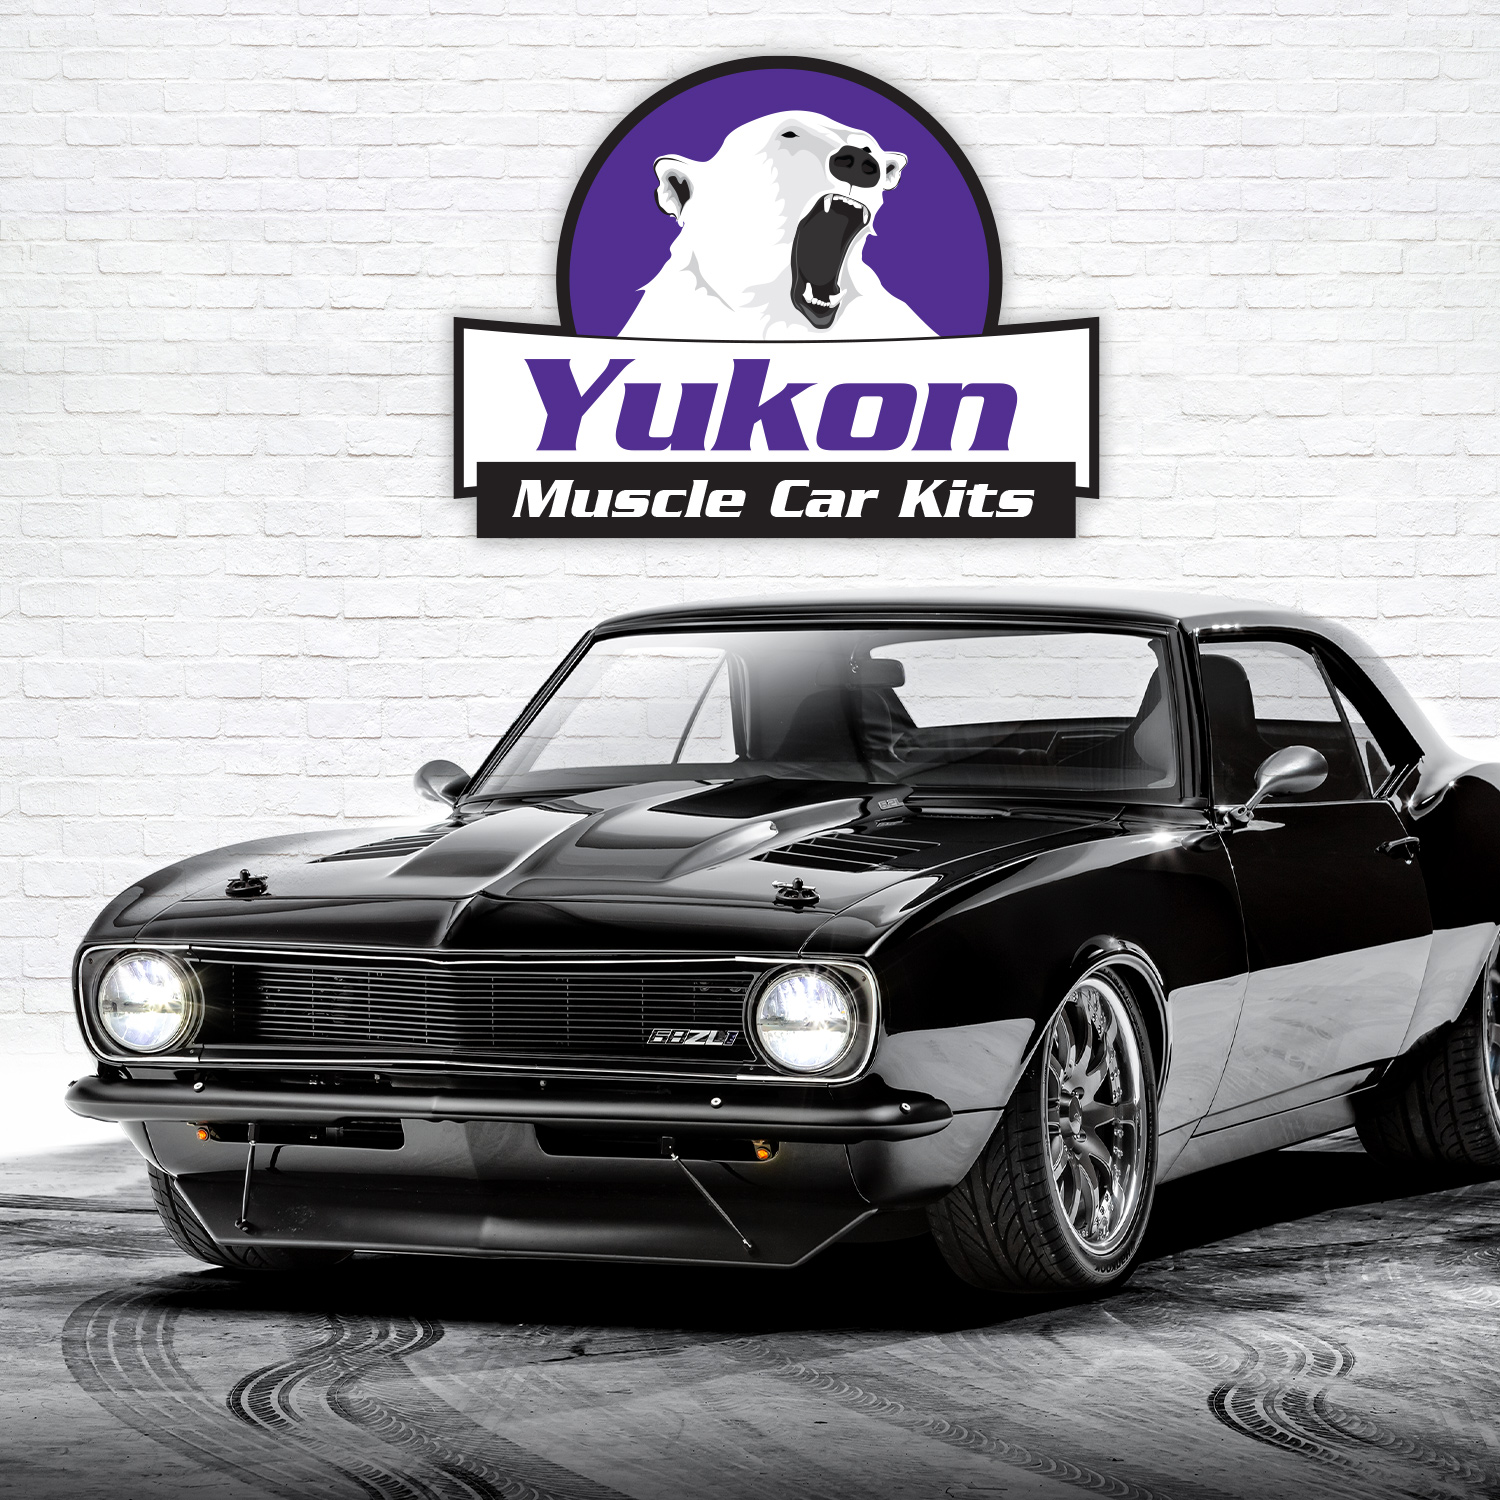 Yukon Muscle Car Limited Slip & Re-Gear Kit for GM 55P, 17 spline, 3.36 ratio